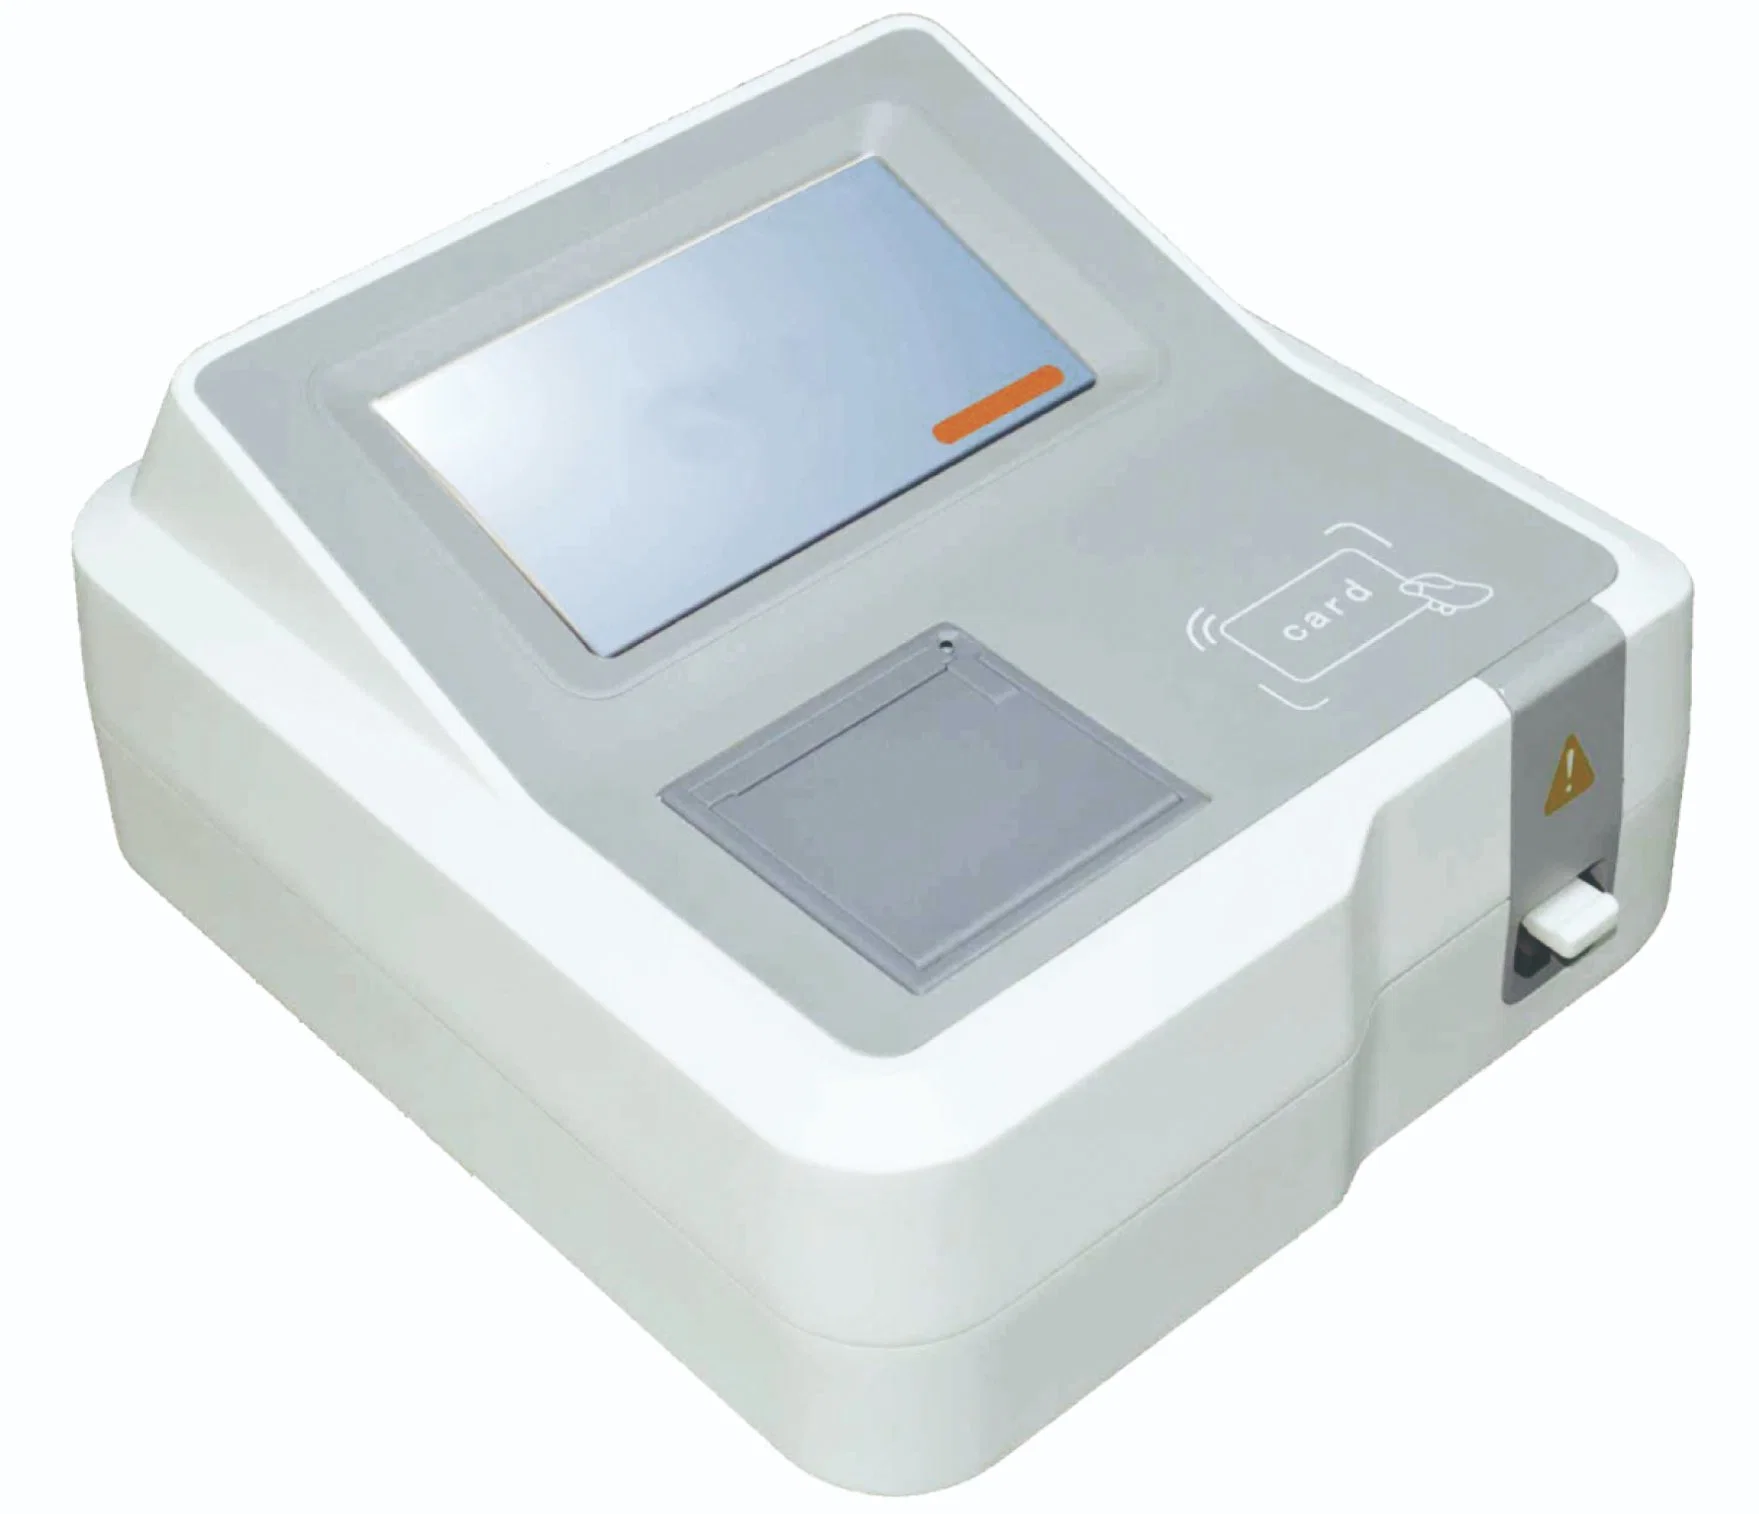 Equipo médico de laboratorio Kit de pruebas totalmente automatizado lector auto portátil Analizador para clínica hospitalaria